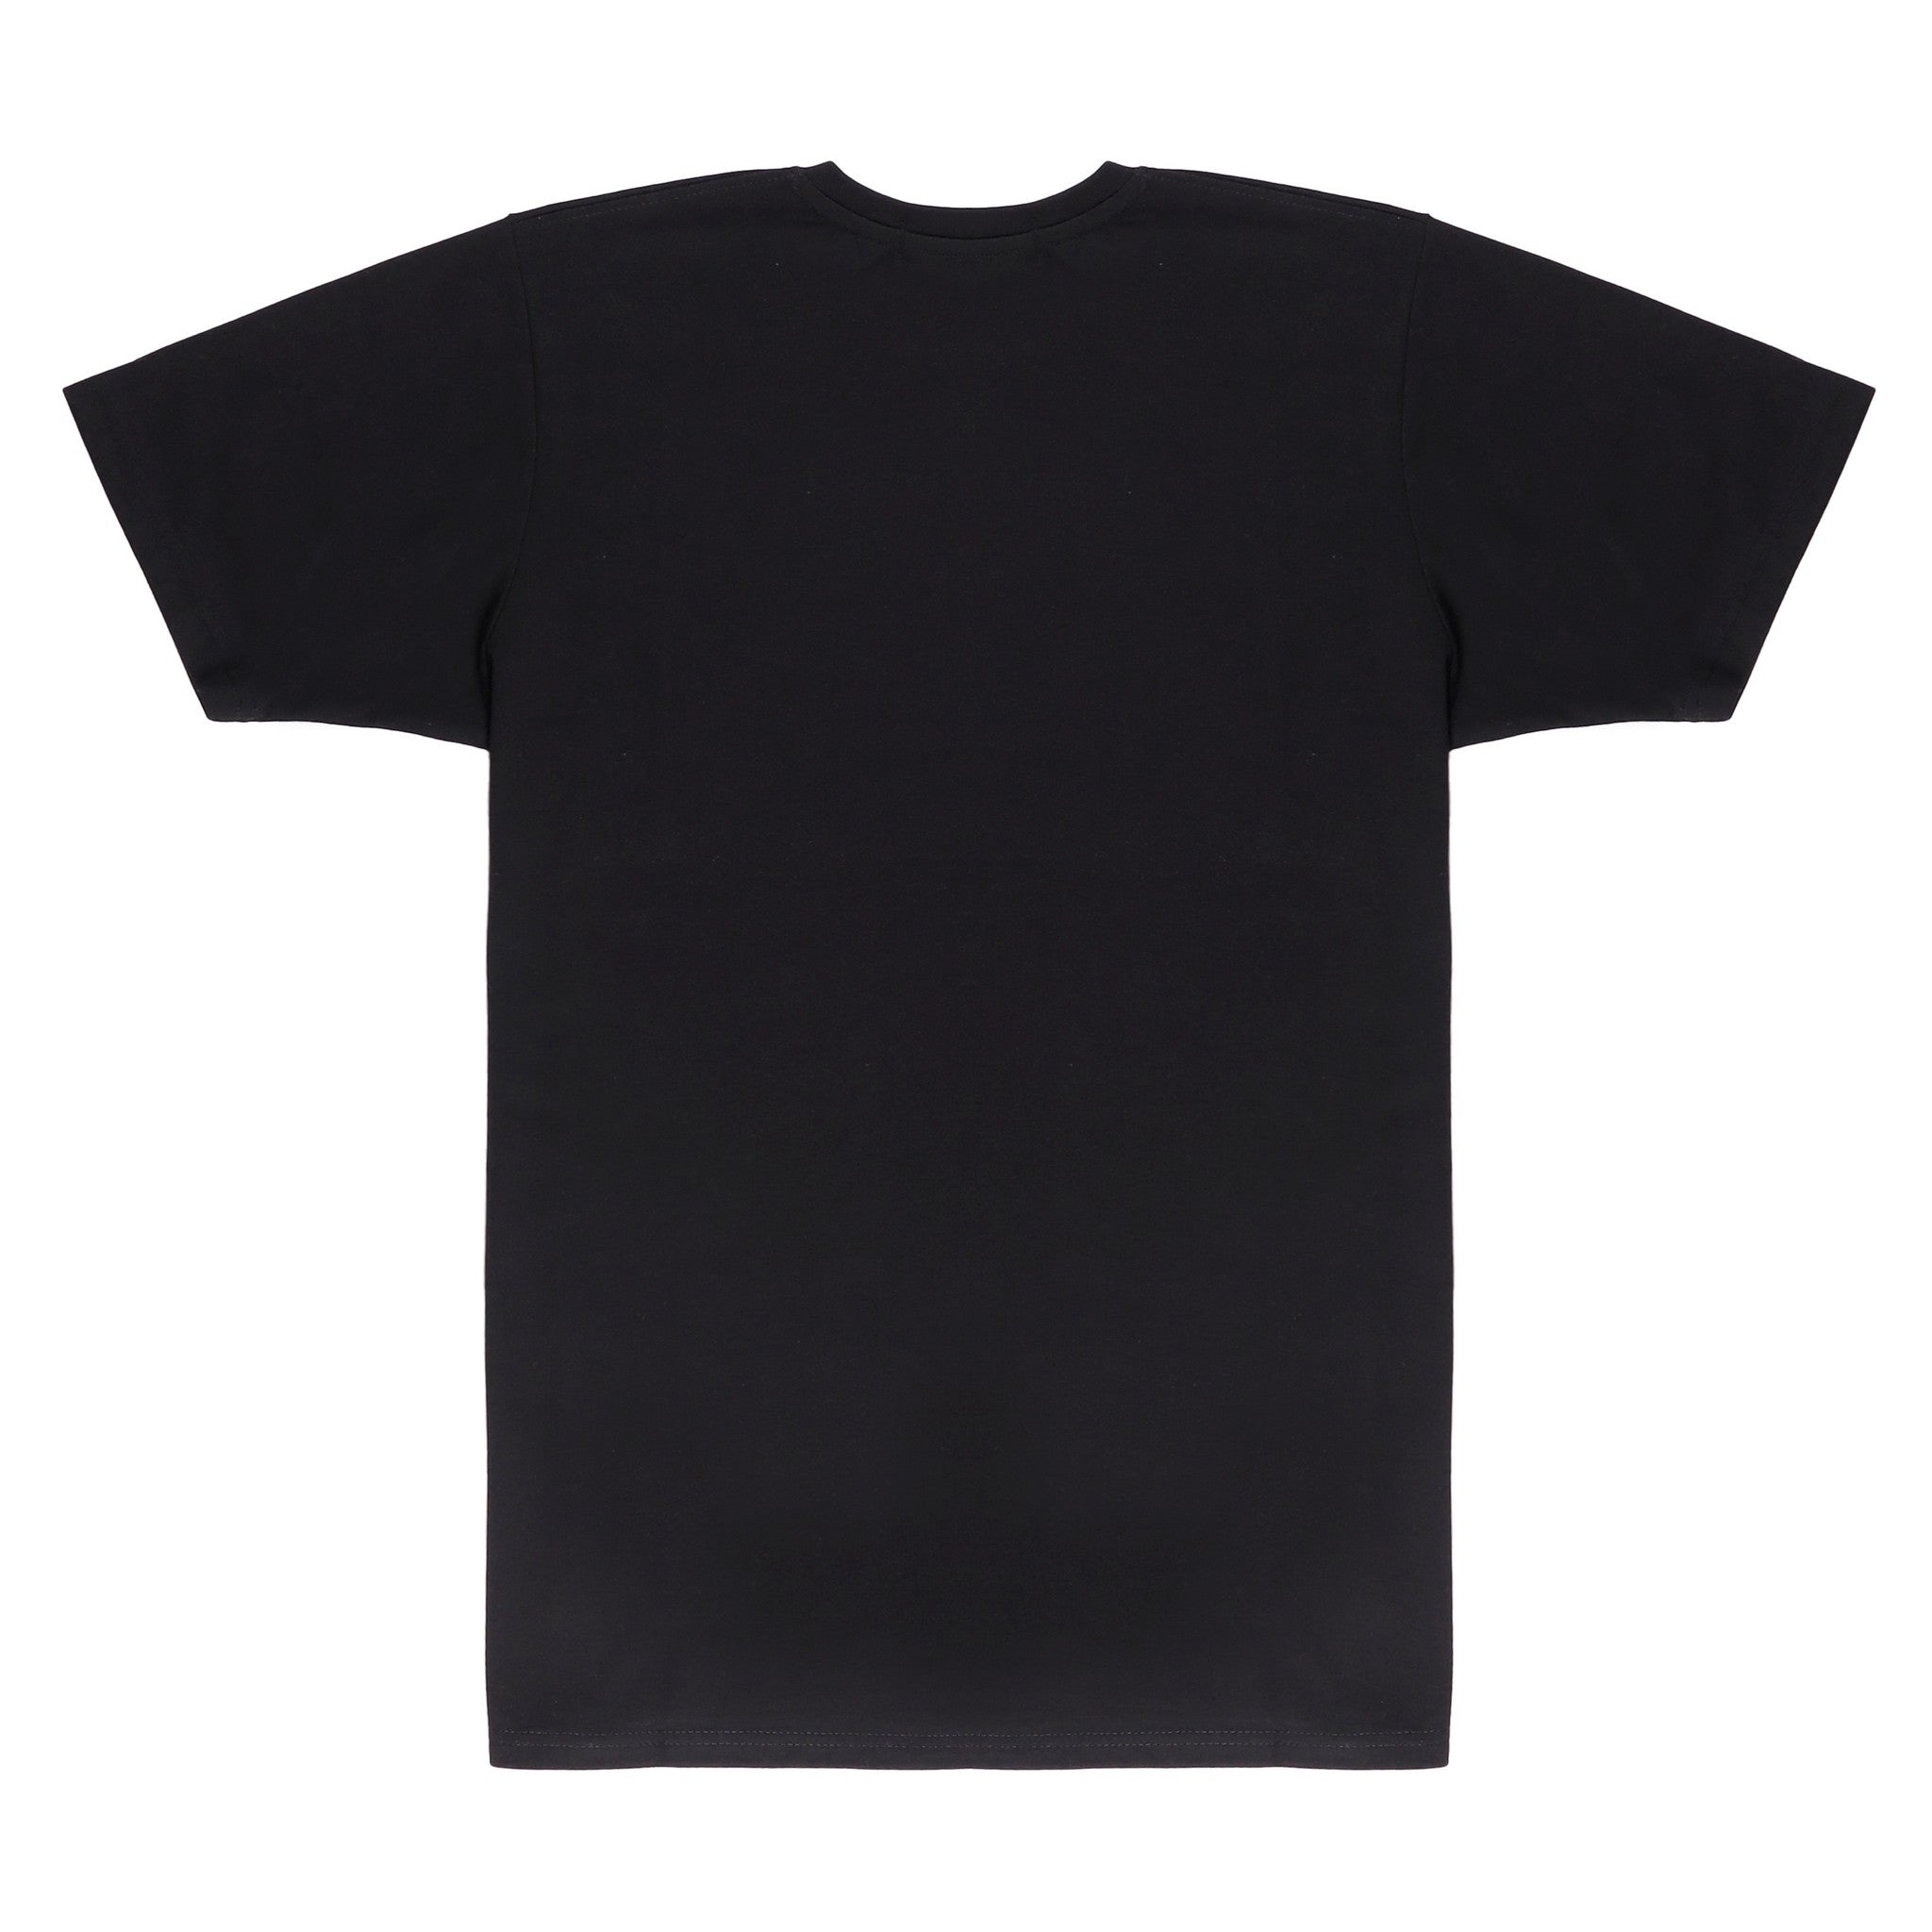 California Print Black T-Shirt